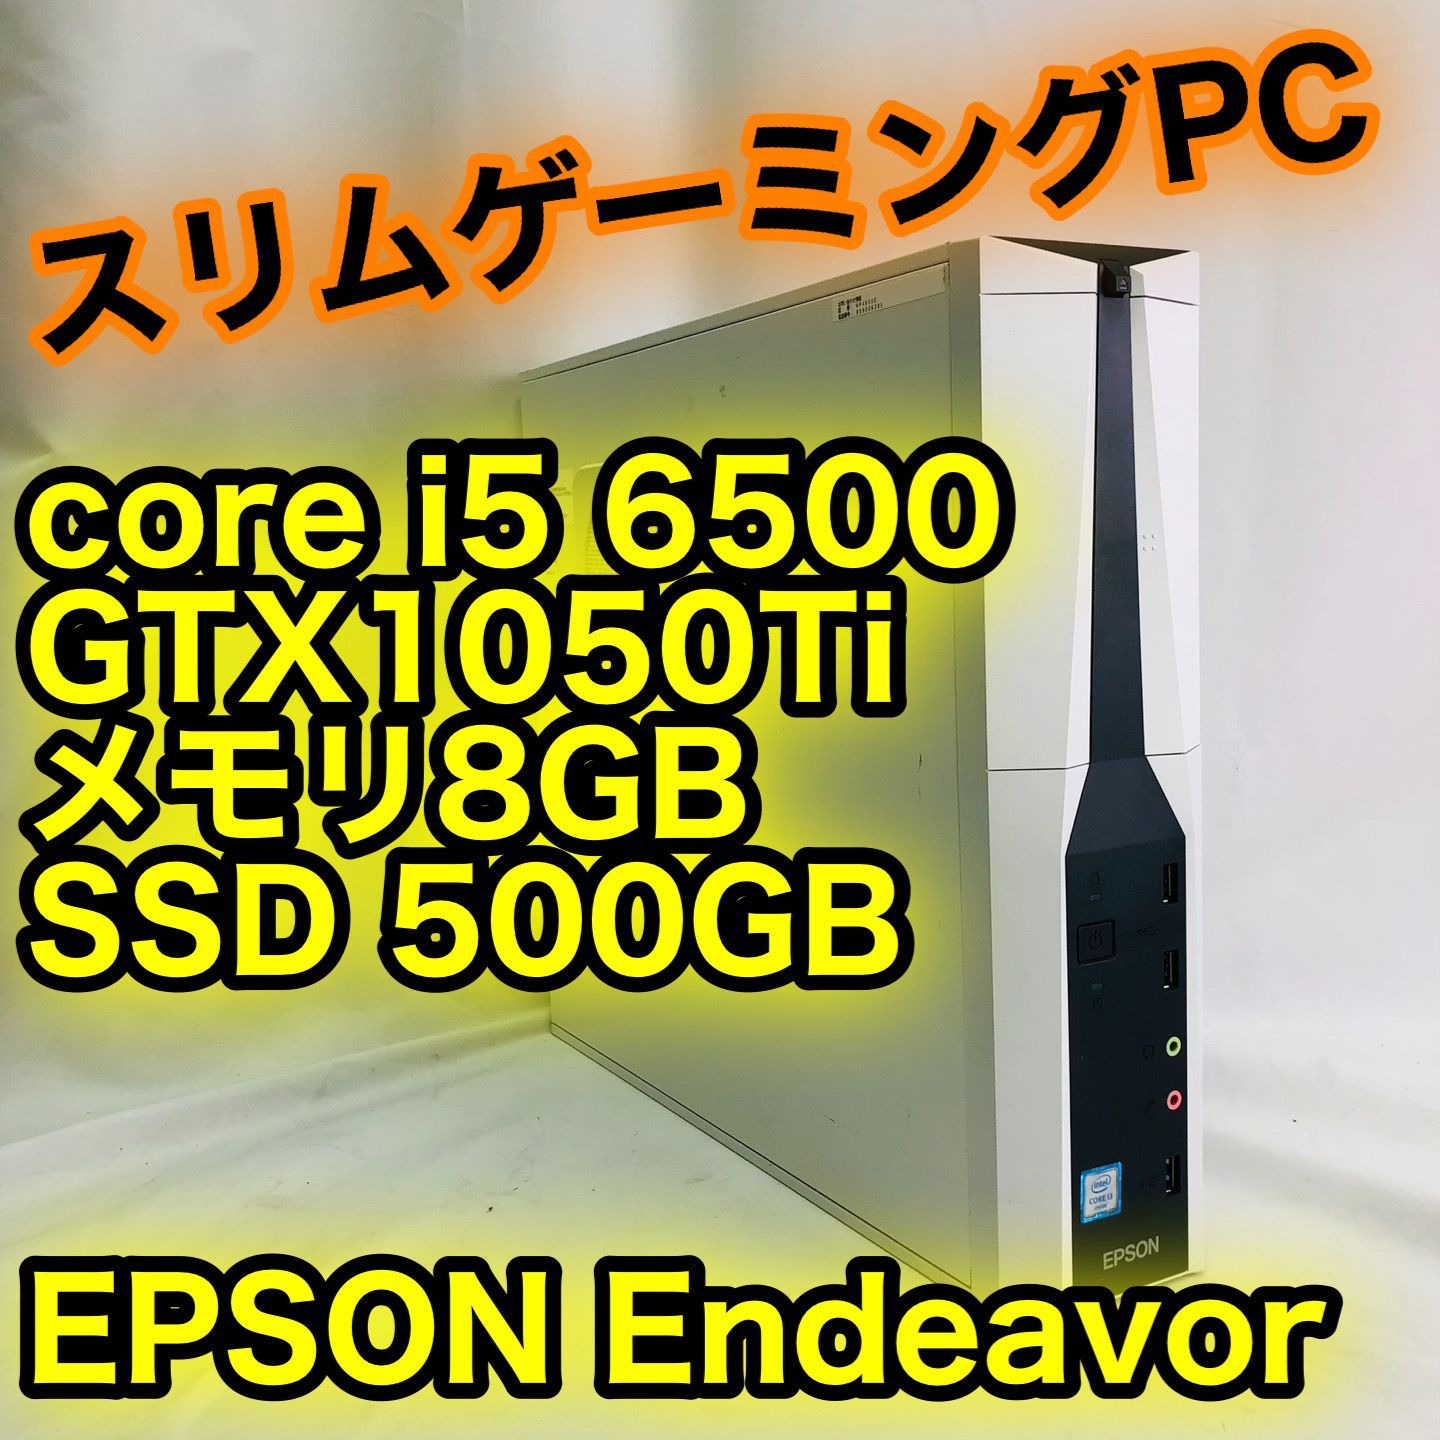 EPSON スリムPC core i5 6500 GTX1050Ti ゲーミング